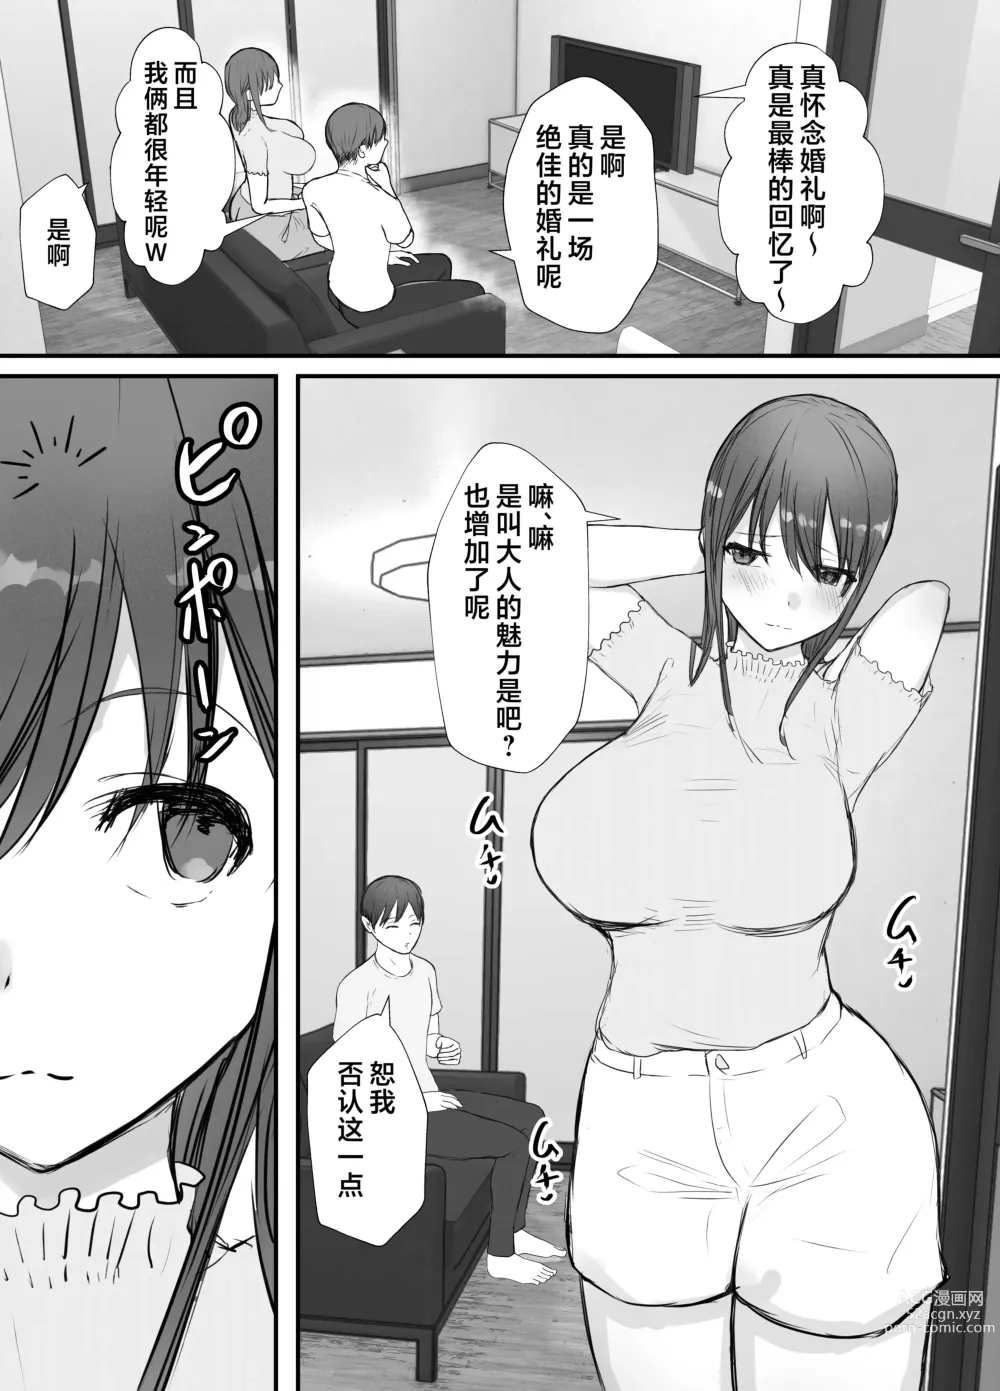 Page 6 of doujinshi 戴绿帽后悔似乎已经迟了哟?3